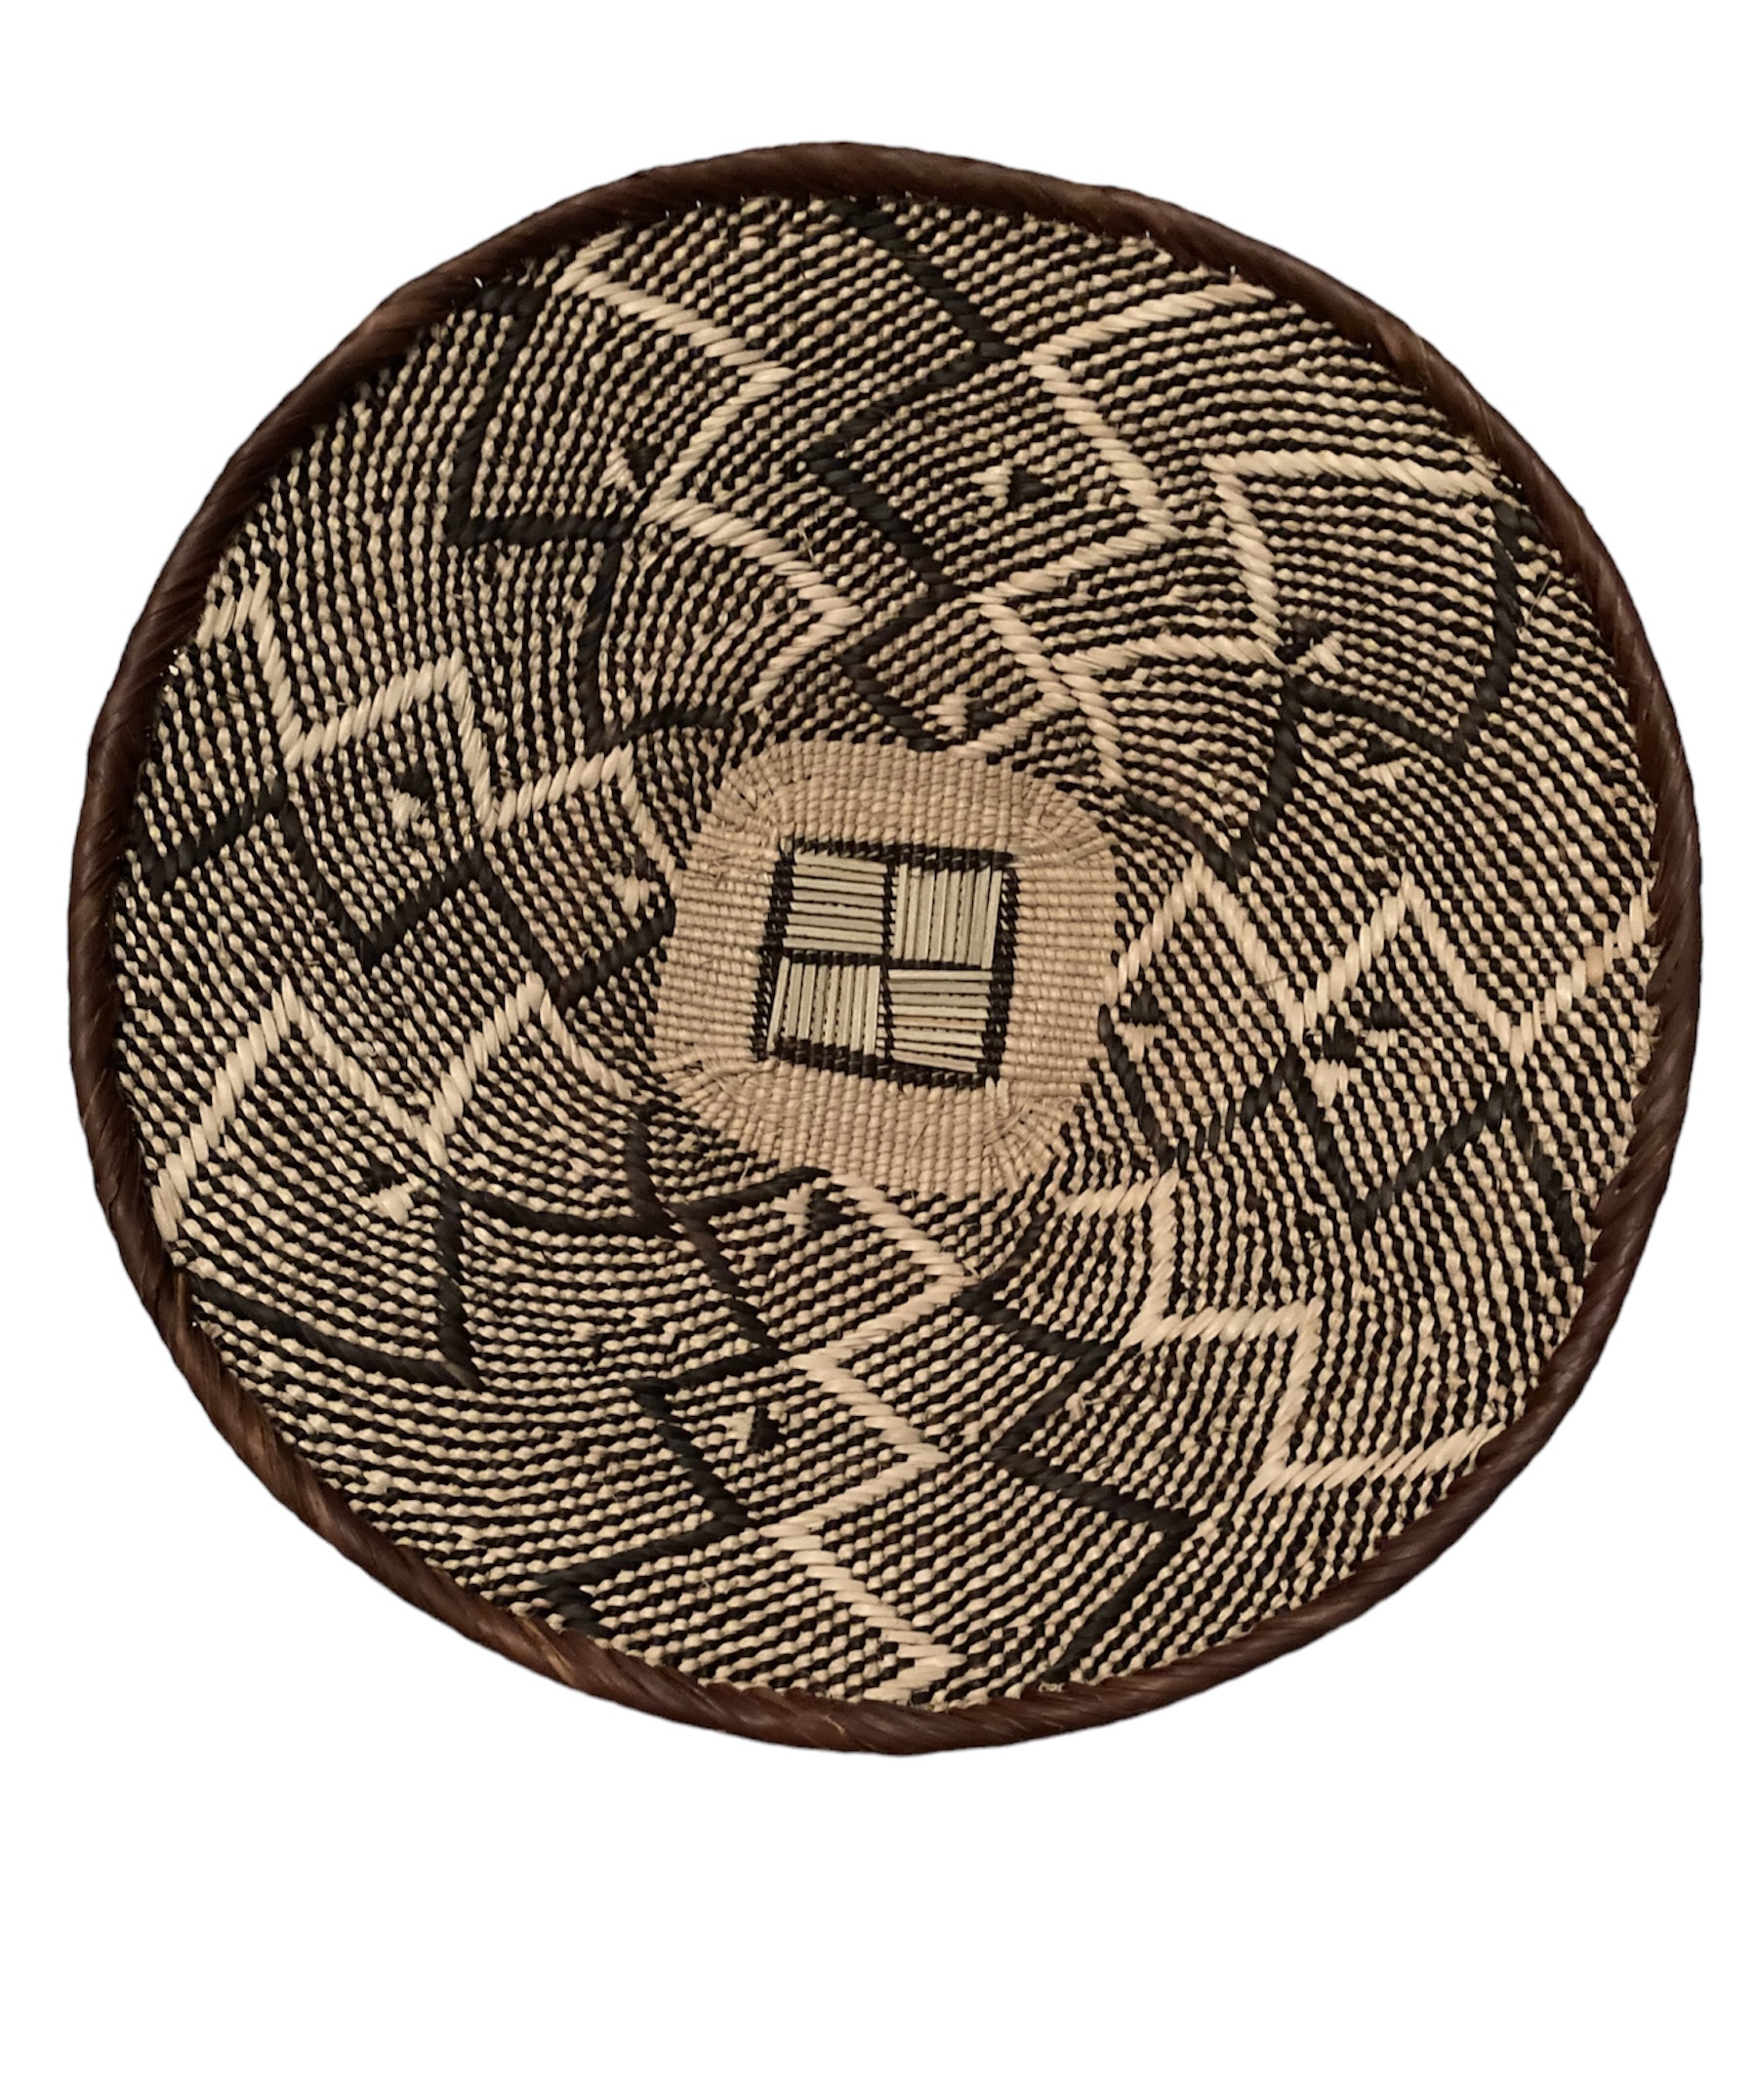 Tonga Basket from Zimbabwe - Design #005 - 15\" dia.